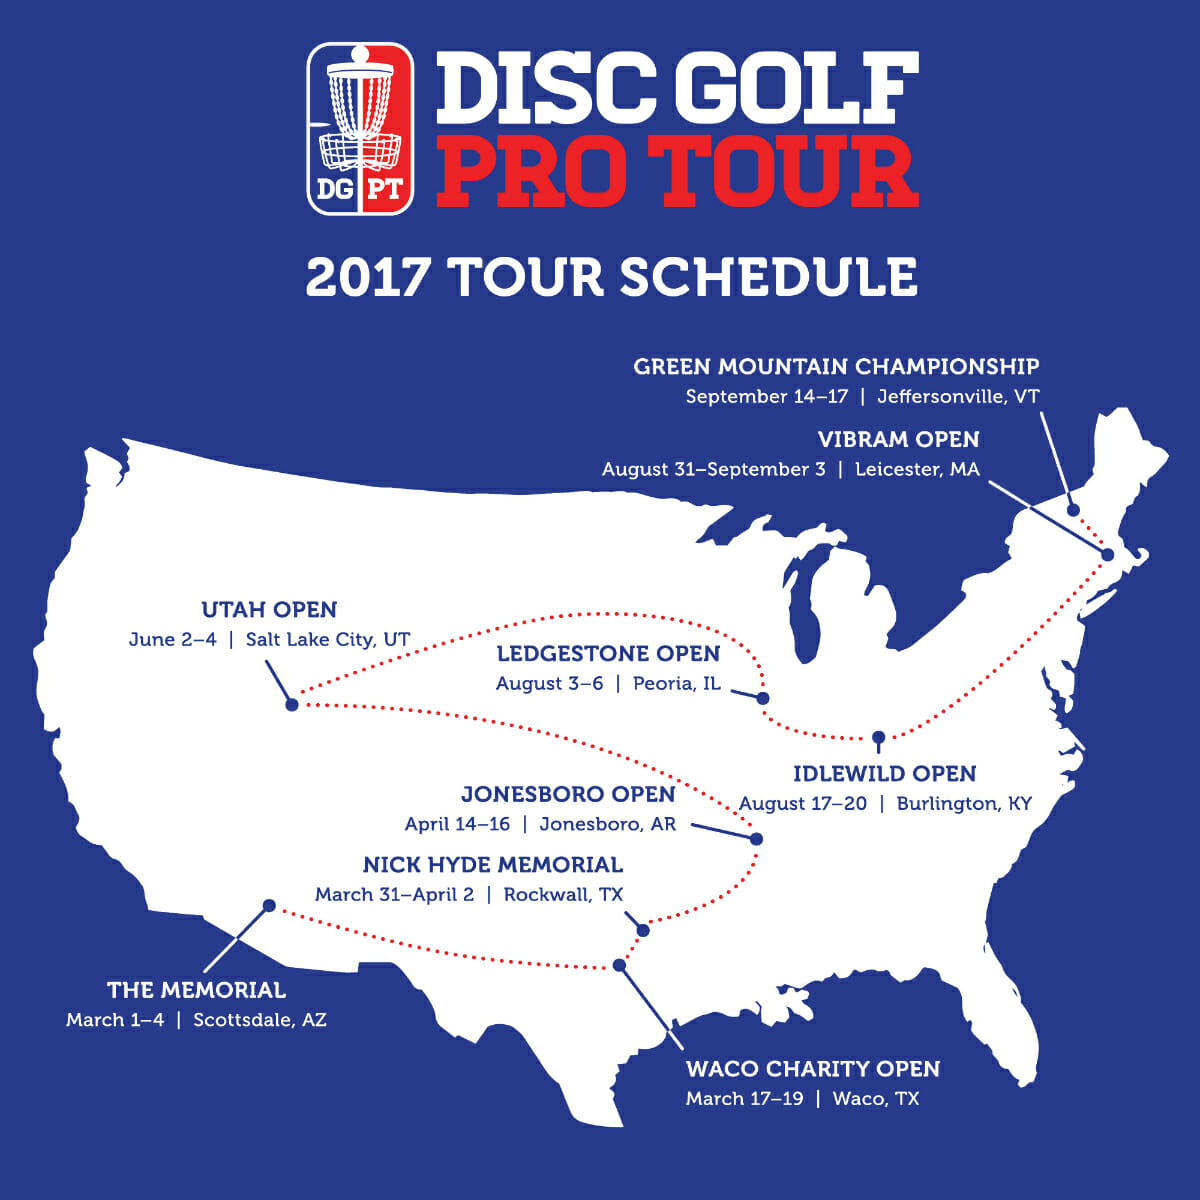 Disc Golf Pro Tour Announces 2017 Schedule, Drops Redesigned Website